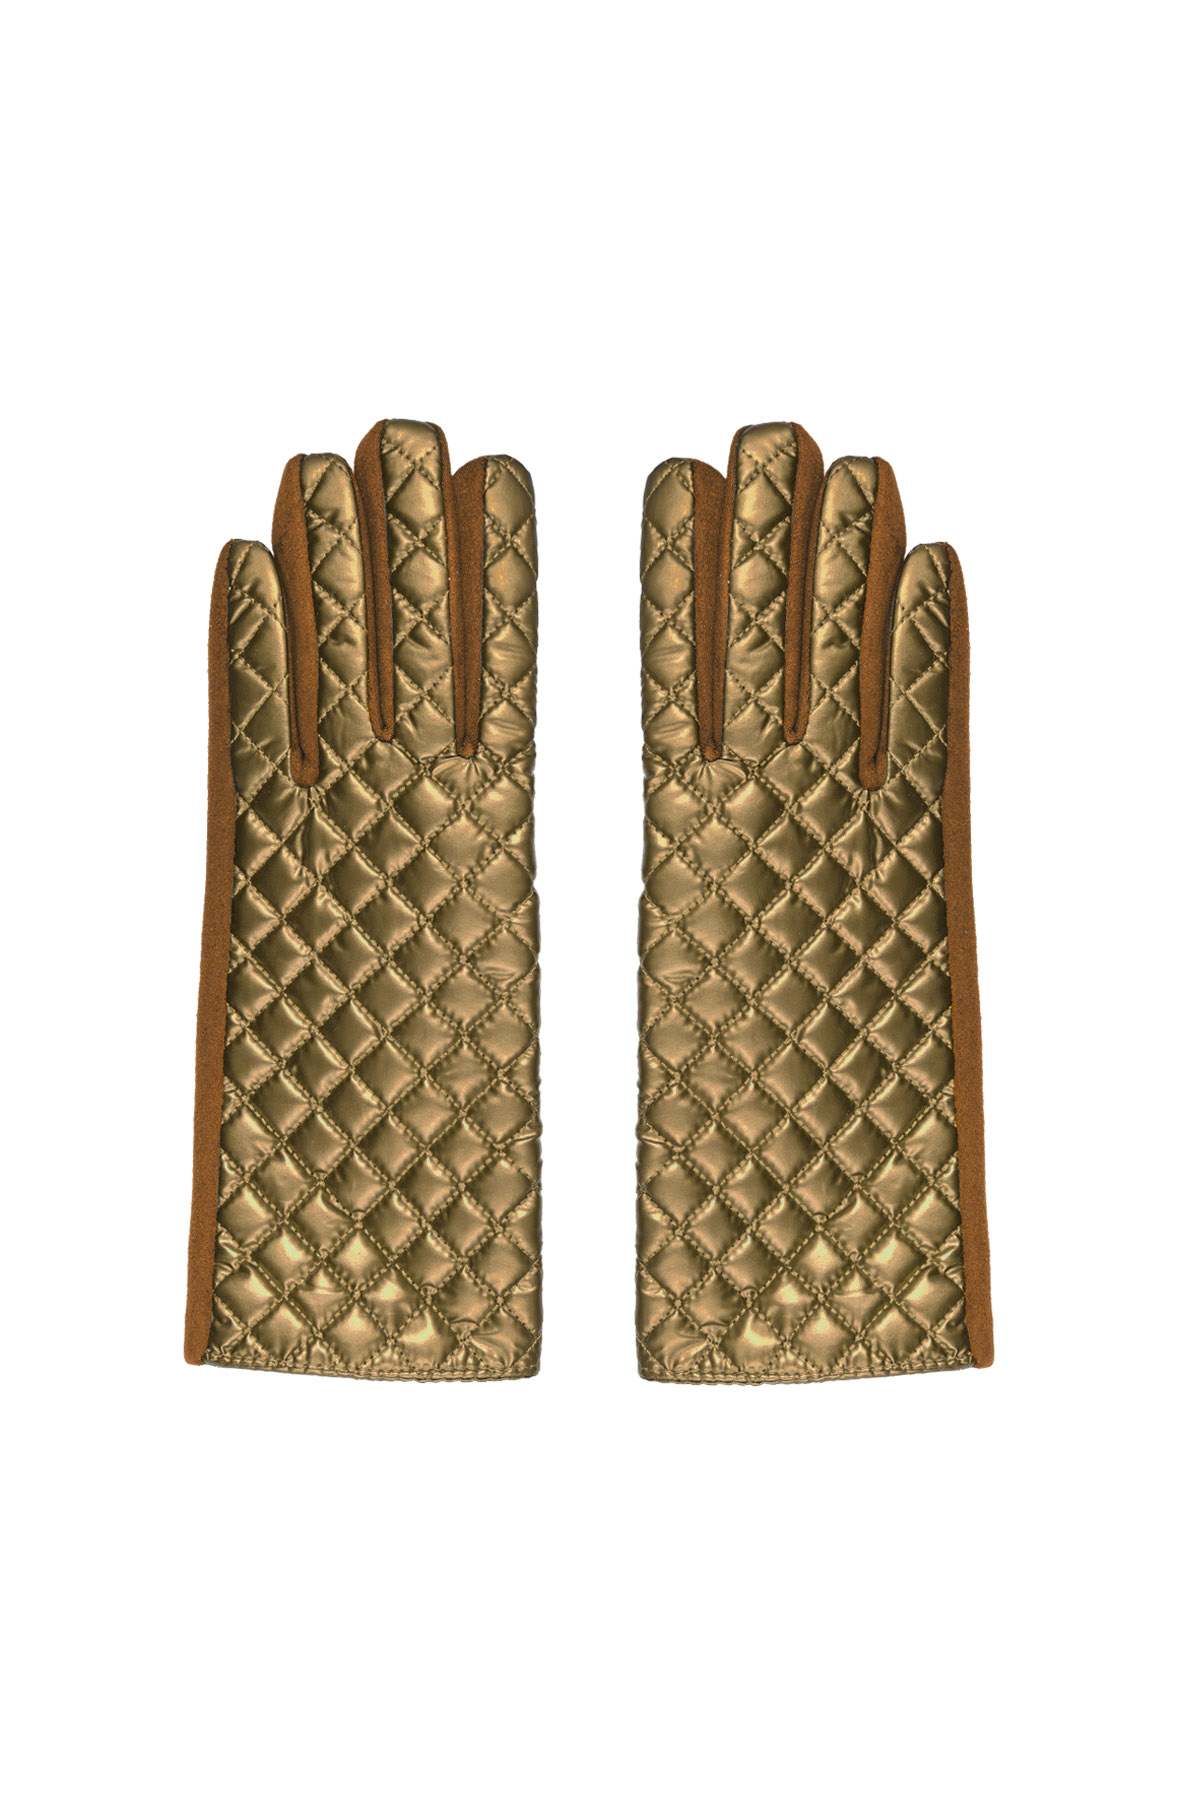 Handschuhe metallic mit Karo - braun h5 